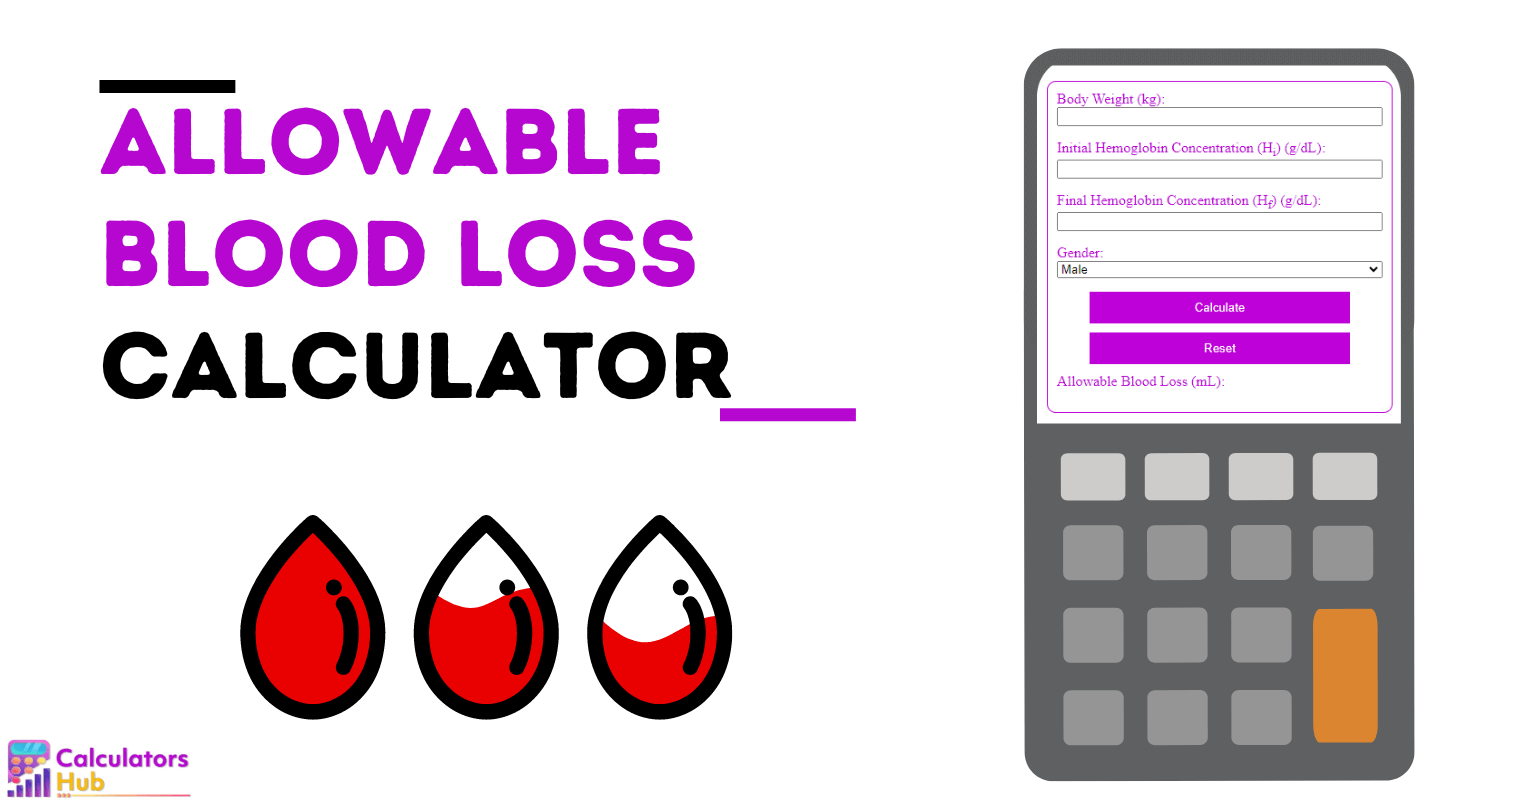 Allowable Blood Loss Calculator